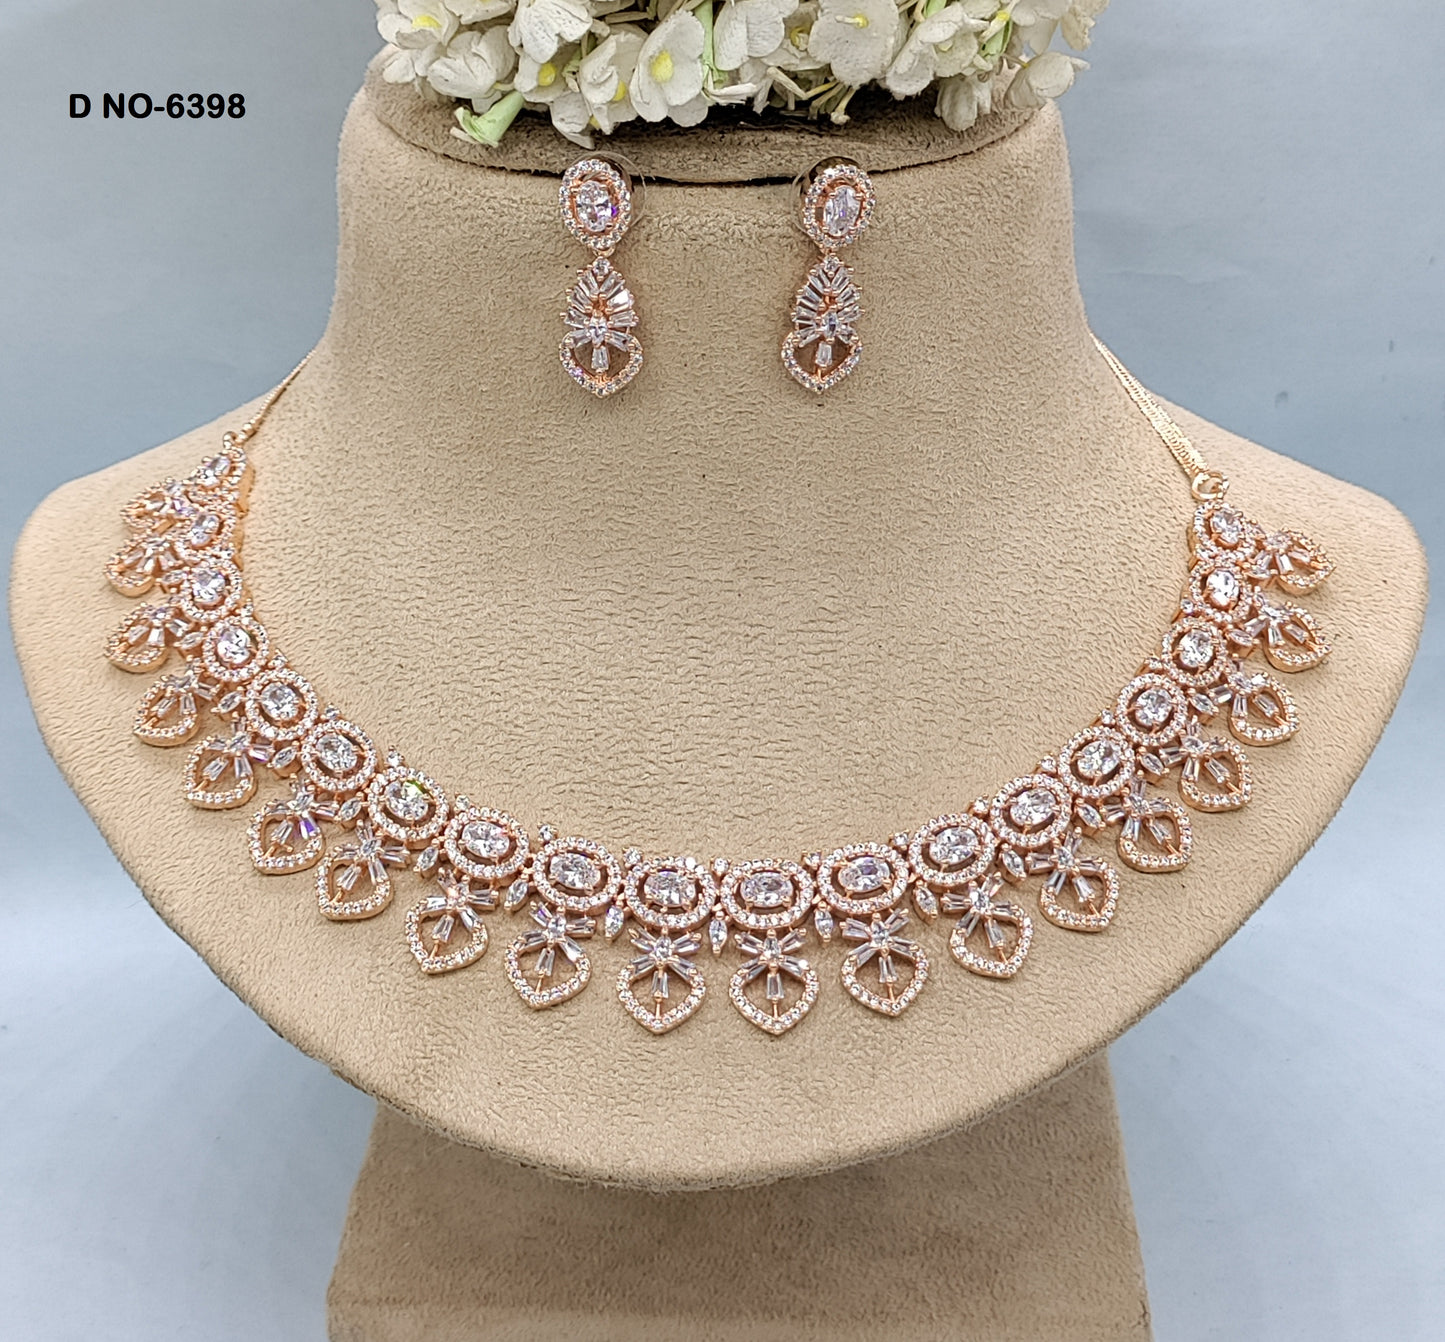 American Diamond Rose gold Necklace Sku-6398 rchiecreation